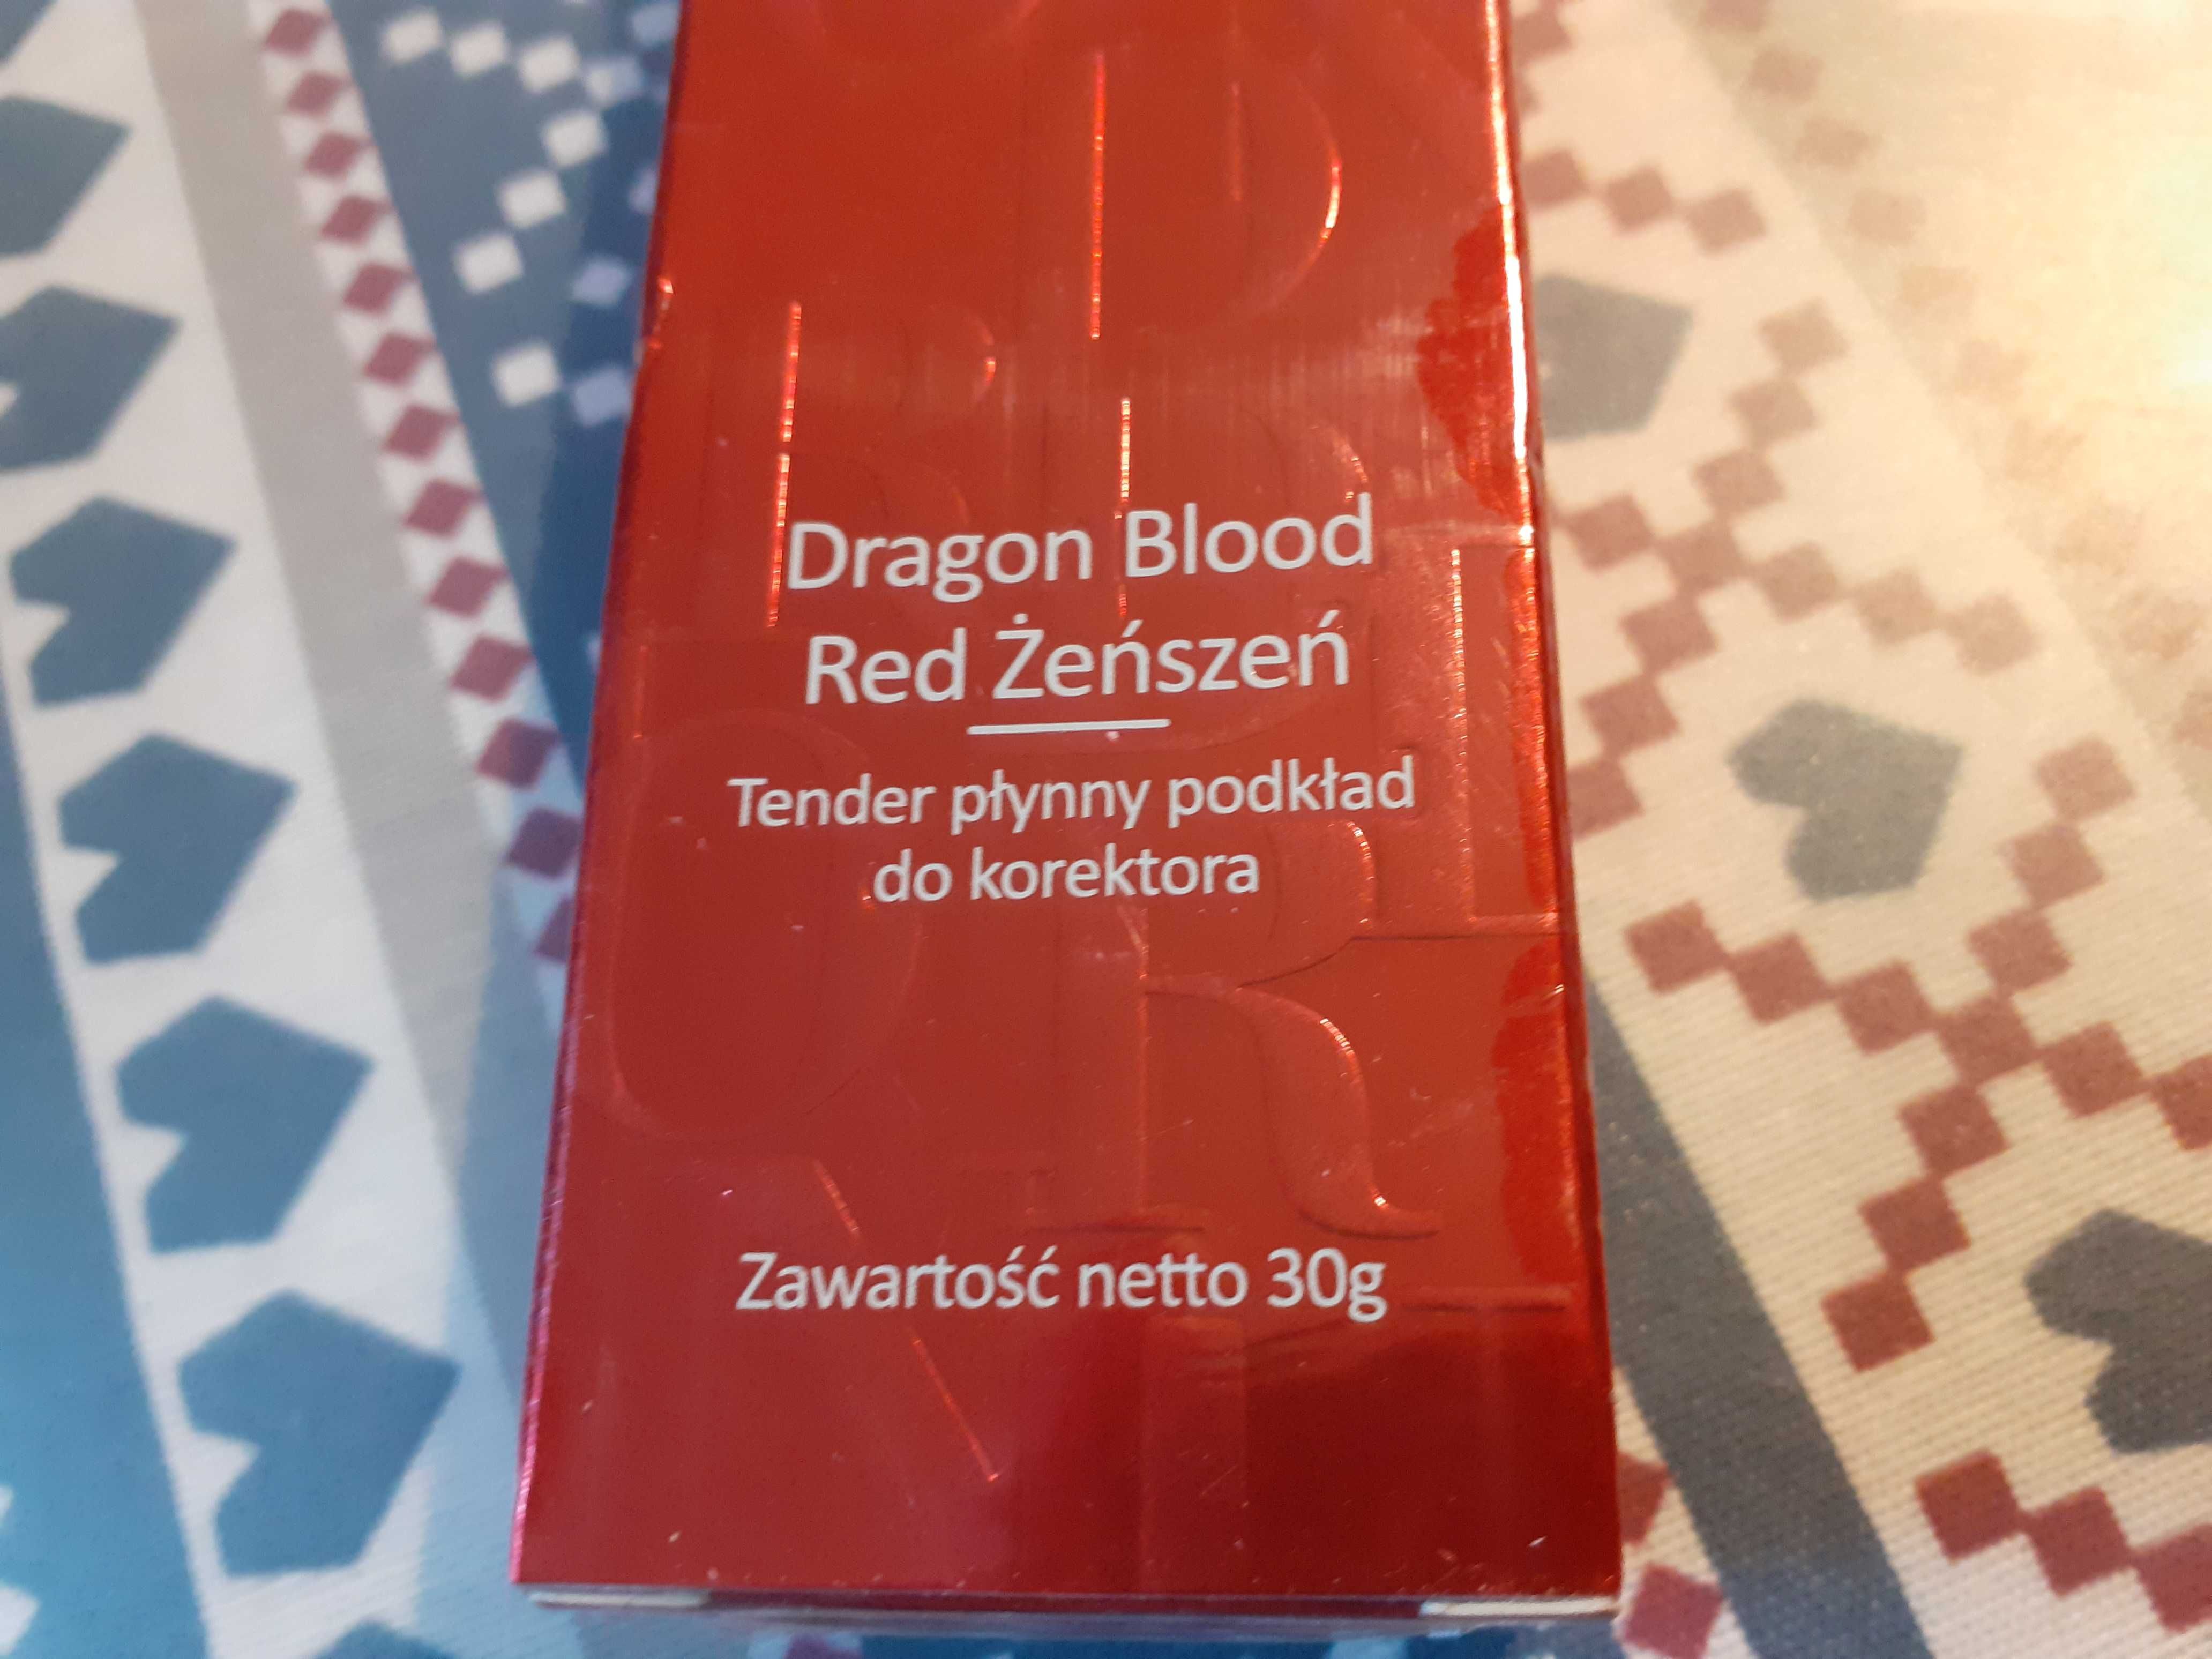 DDR fluid podklad smocza krew